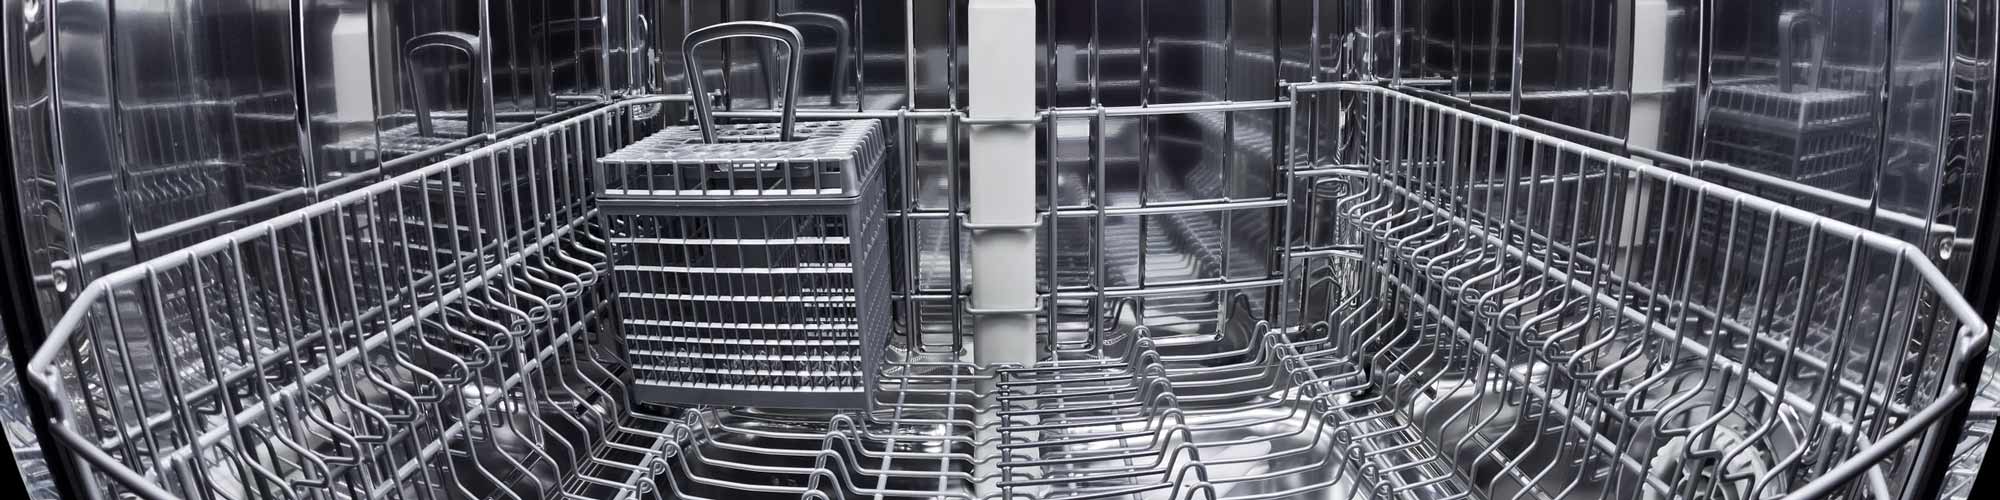 Interior Dishwasher 